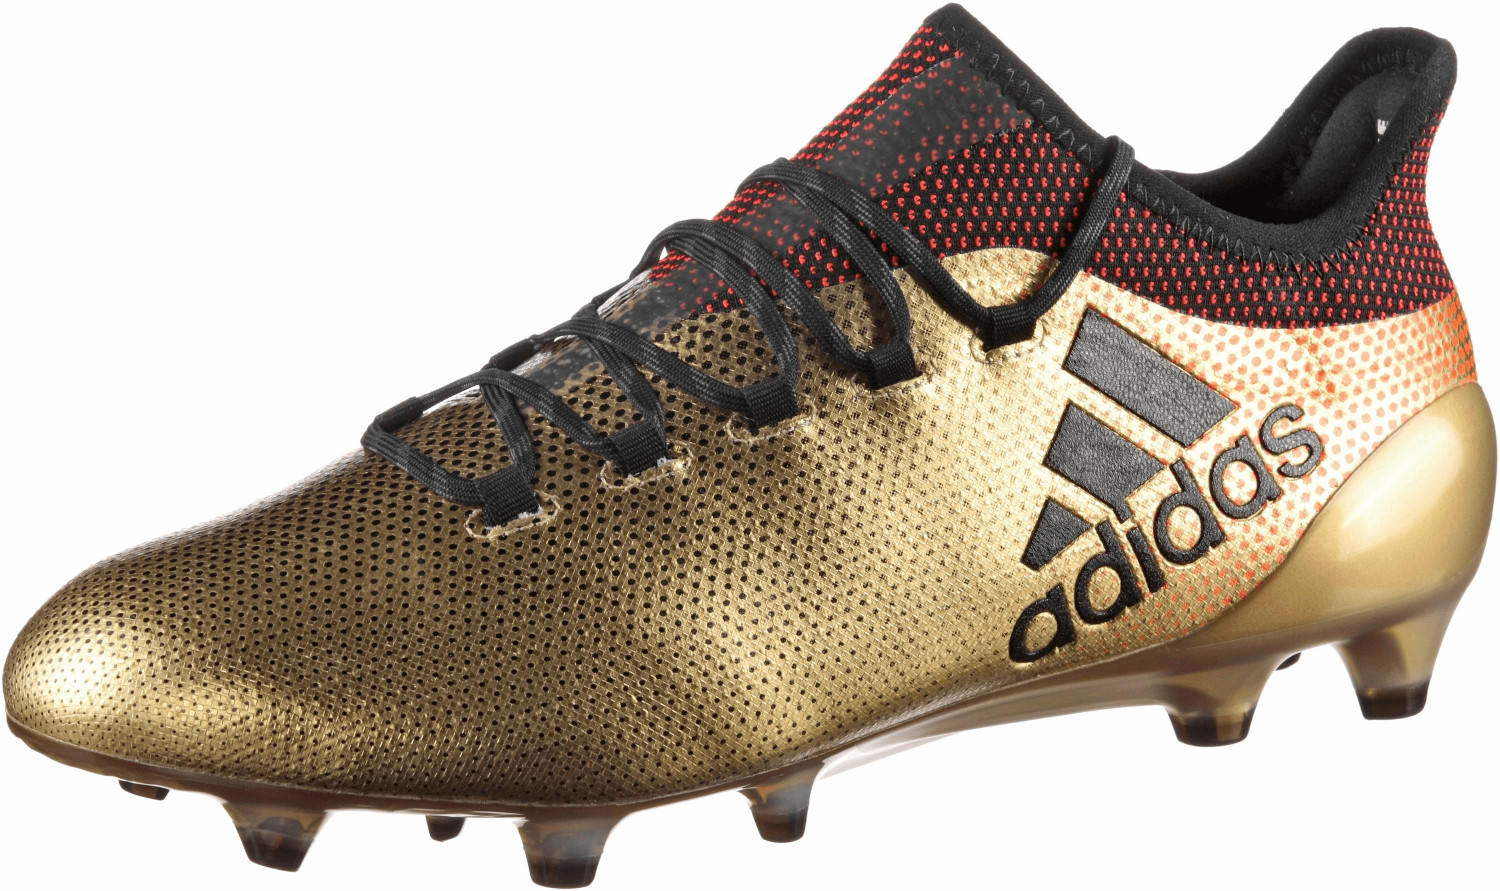 Adidas X 17.1 FG tactile gold metallic/core black/solar red